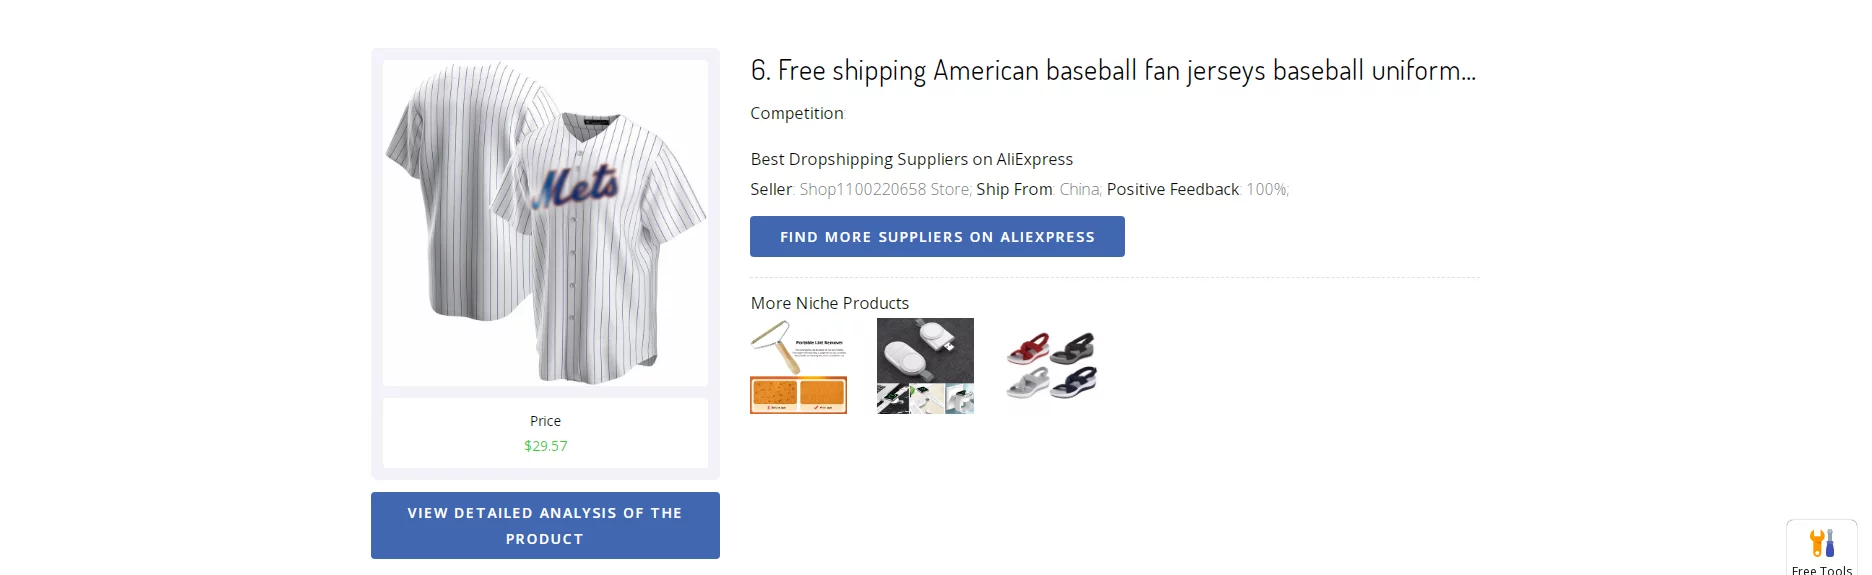 Best Baseball Dropshipping Suppliers 1: Shop1100220658